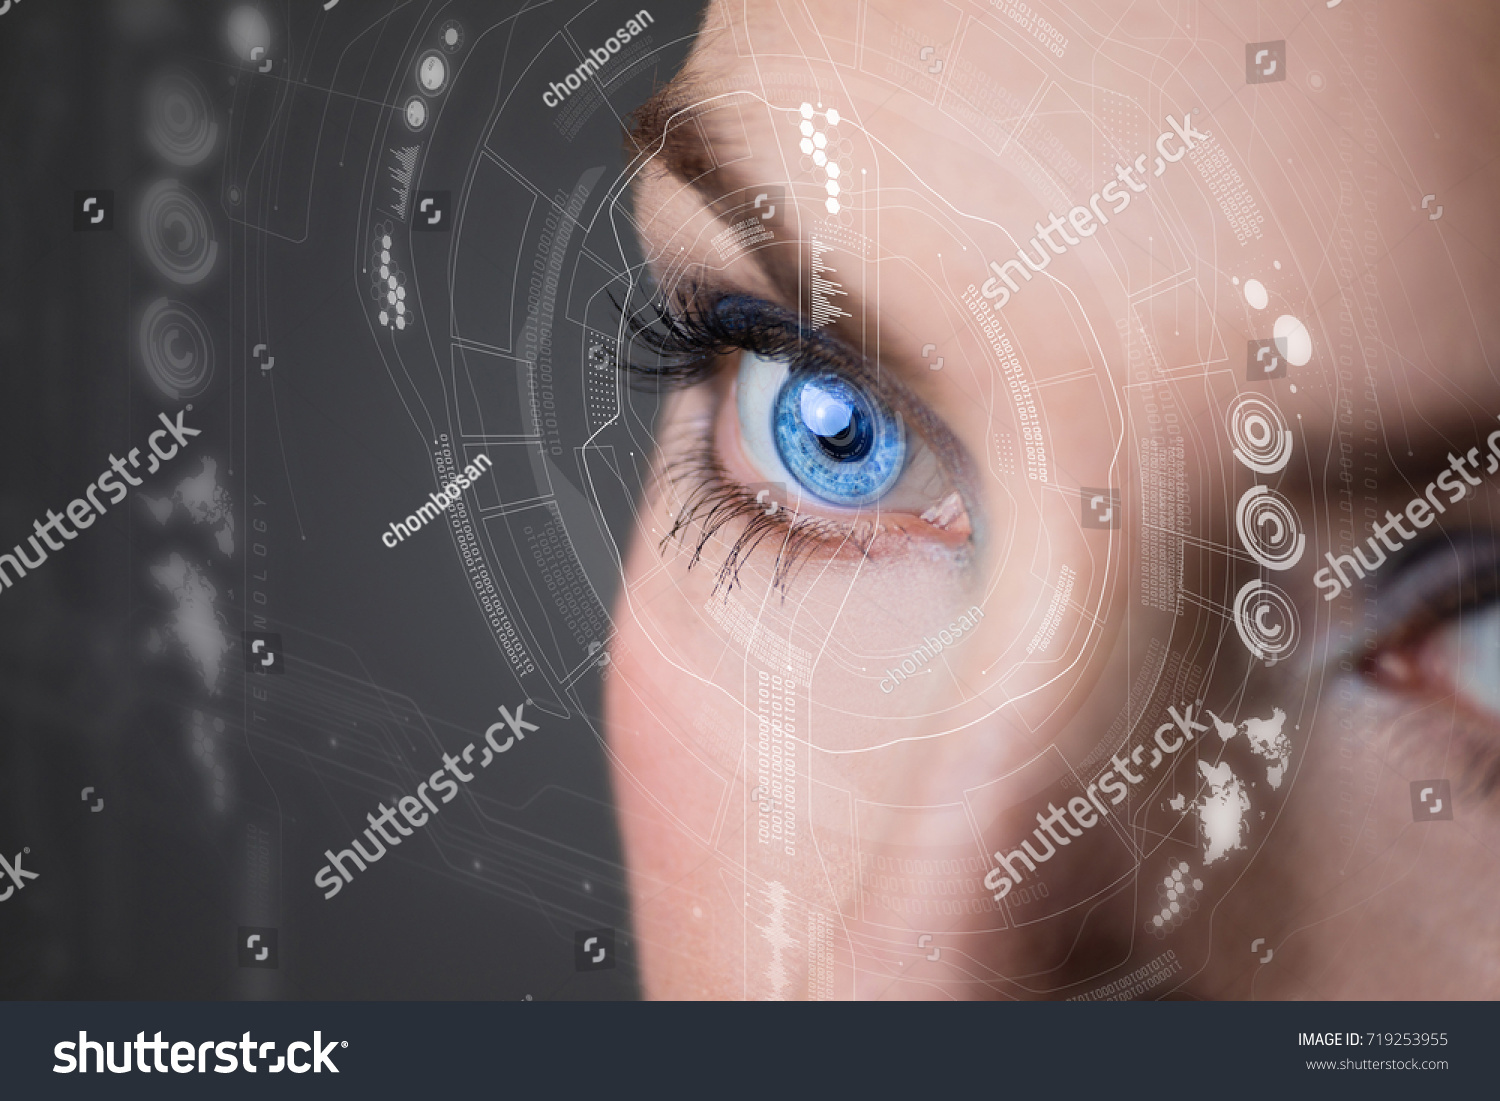 Iris recognition concept Smart contact lens. Mixed media. #719253955